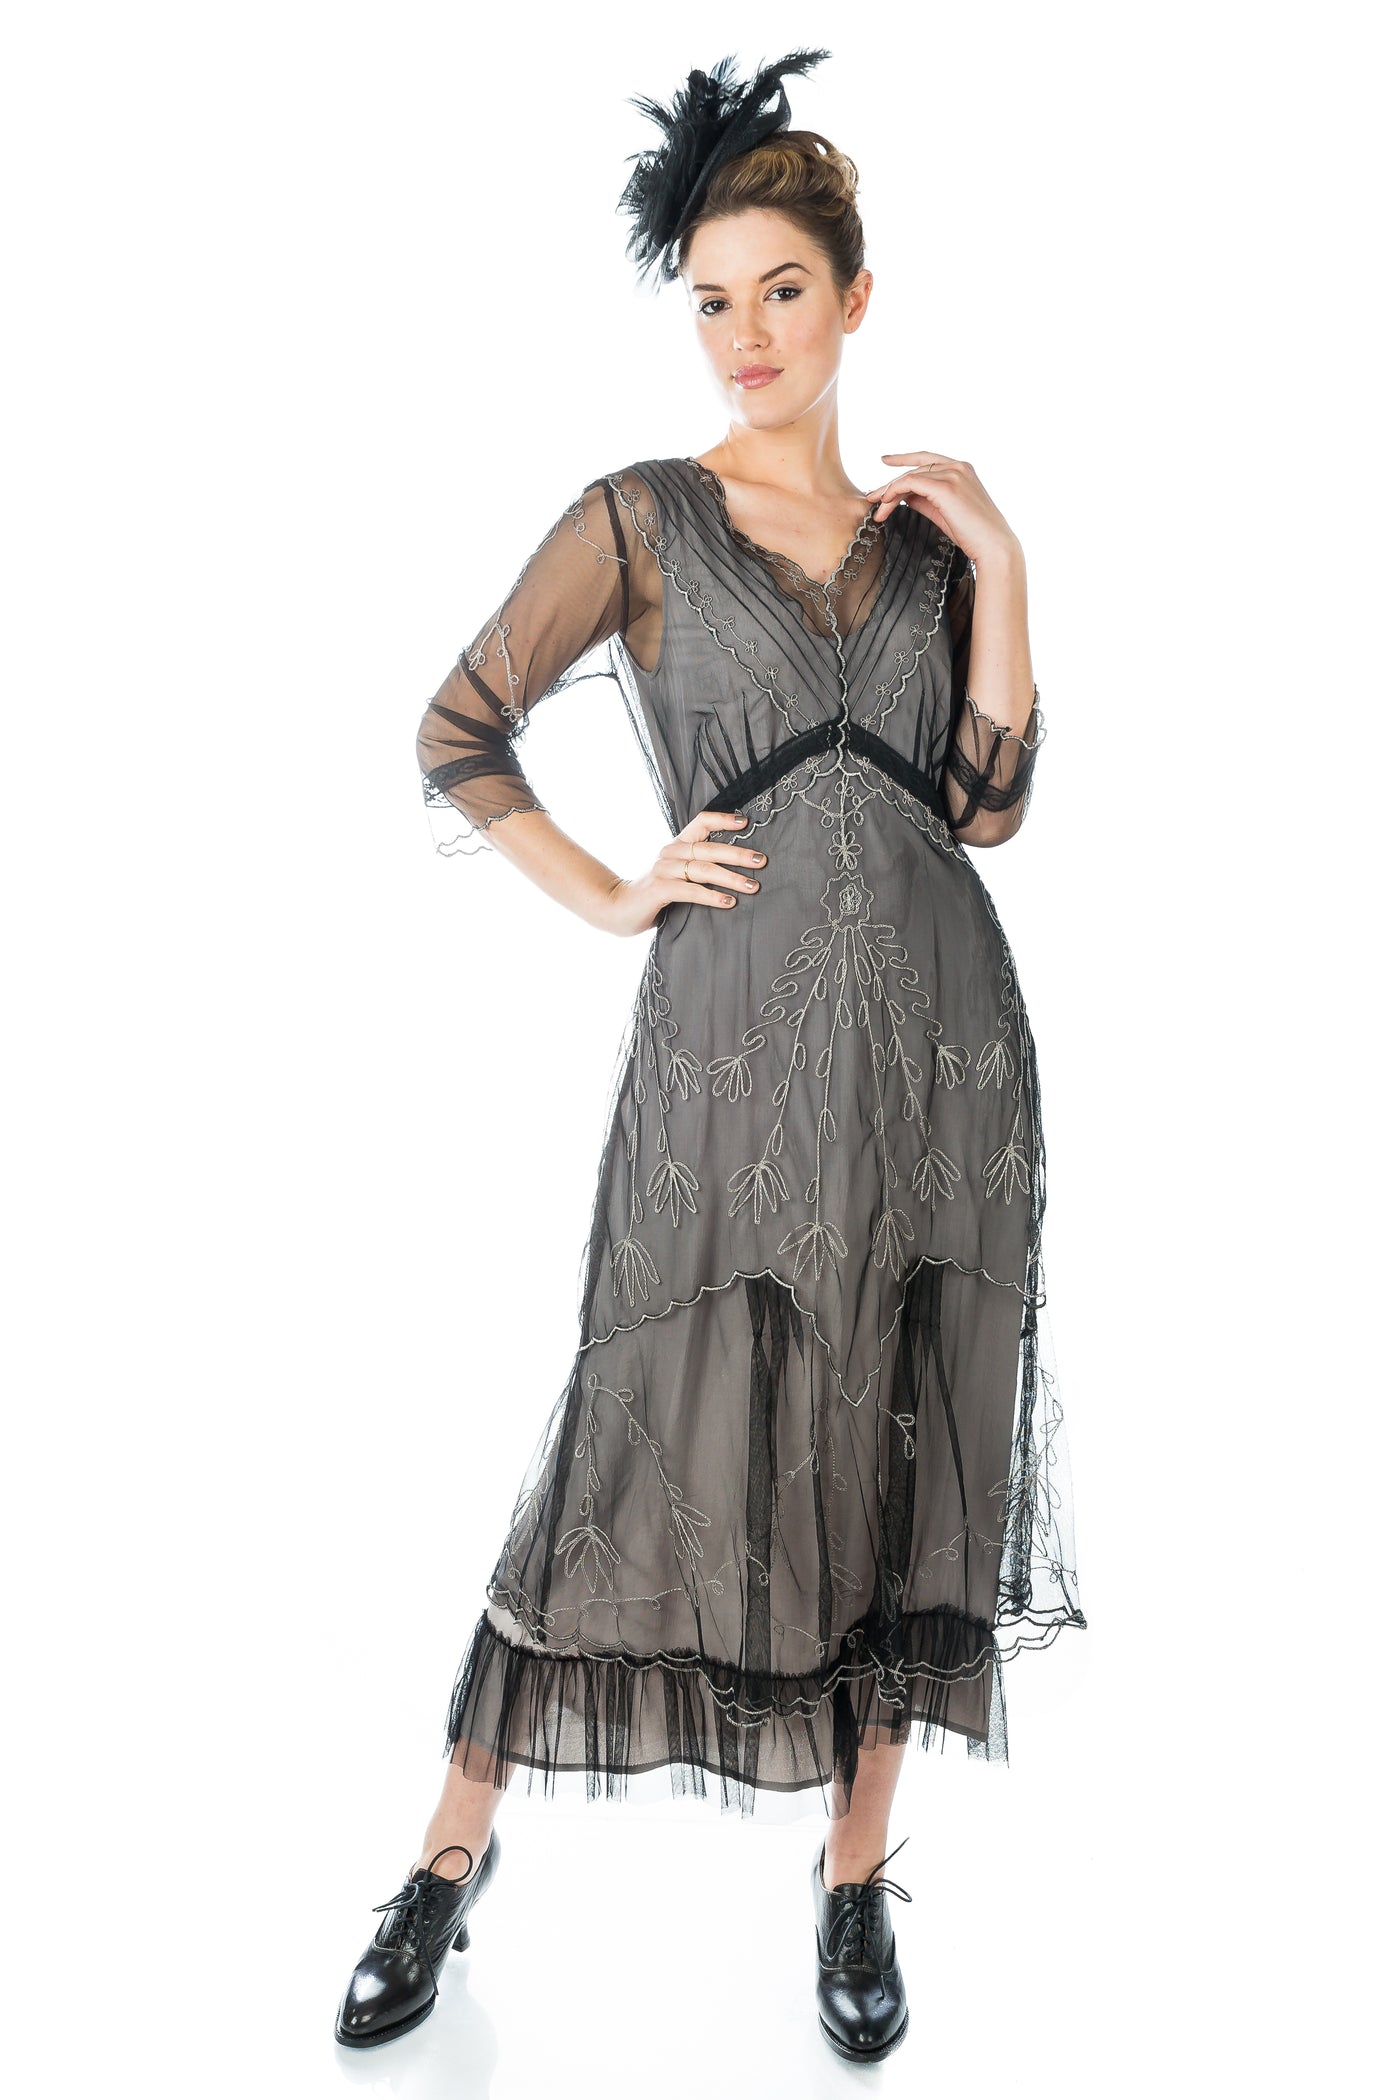 Nataya Sophia CL-509 Black/Silver Dress